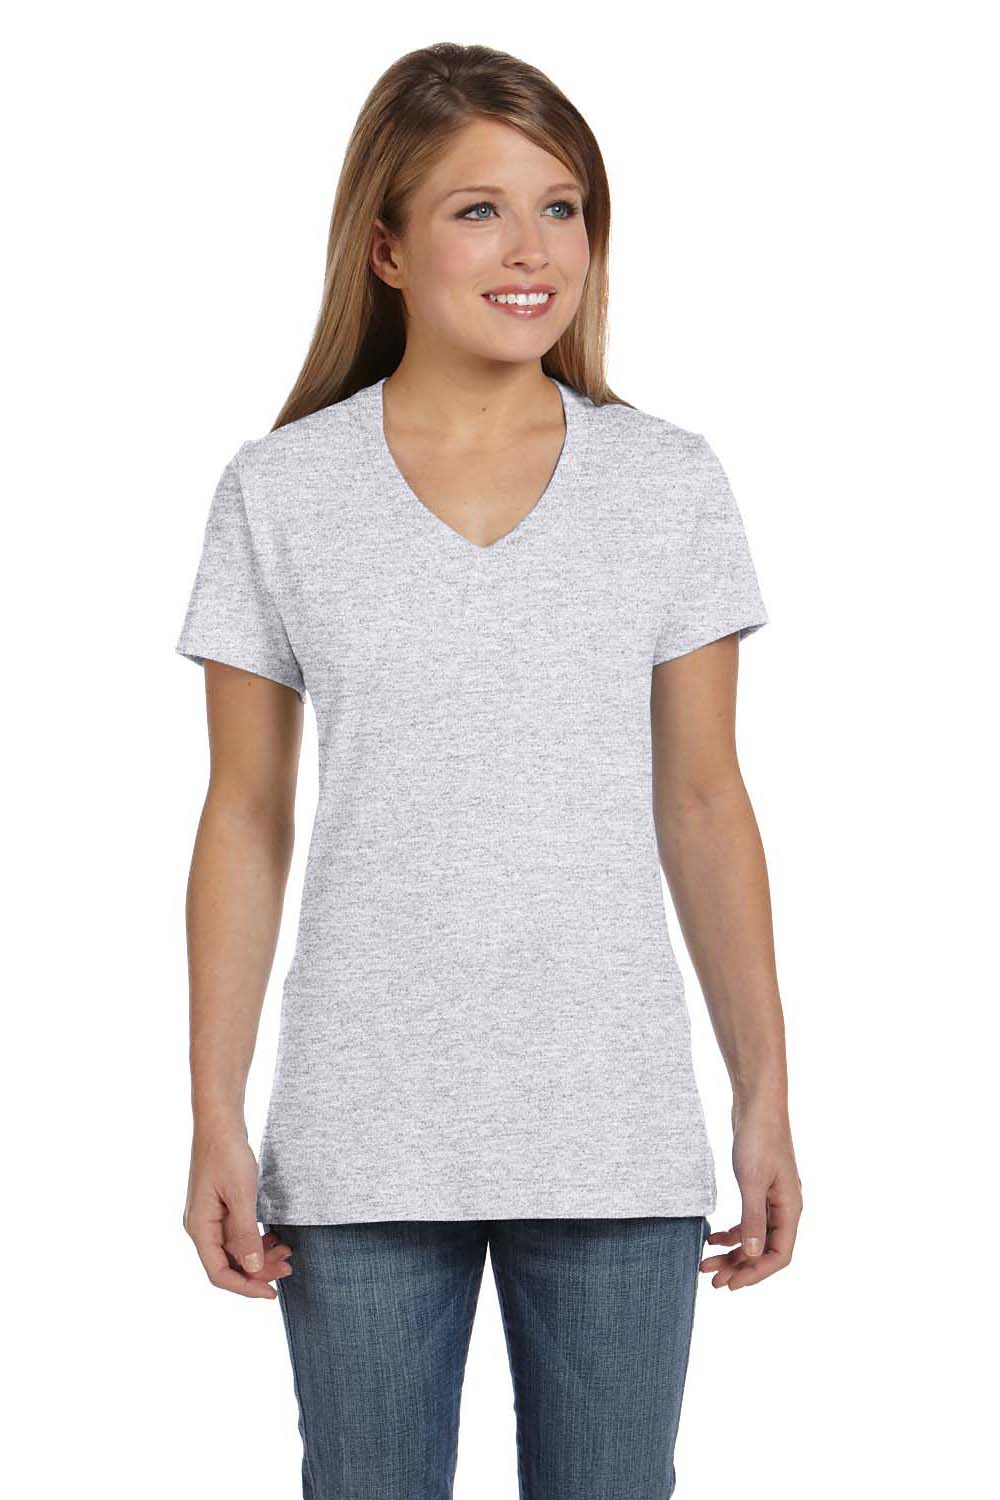 Hanes S04V Womens Nano-T Short Sleeve V-Neck T-Shirt Ash Grey Front